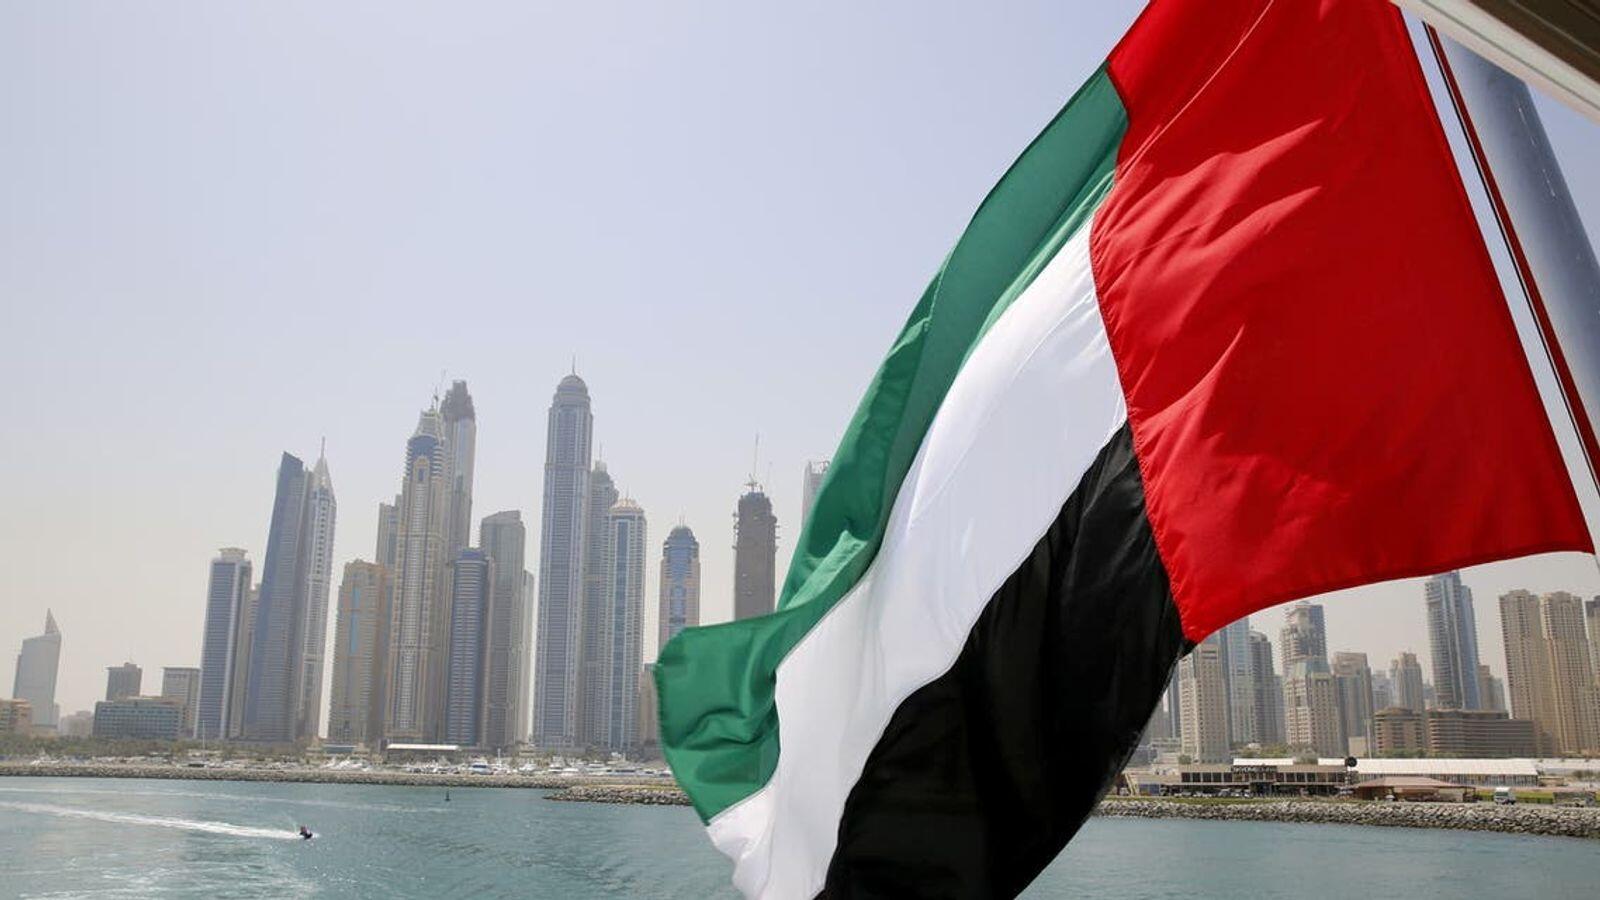 UAE expresses solidarity with Ecuador and Peru, offers condolences over earthquake victims - News